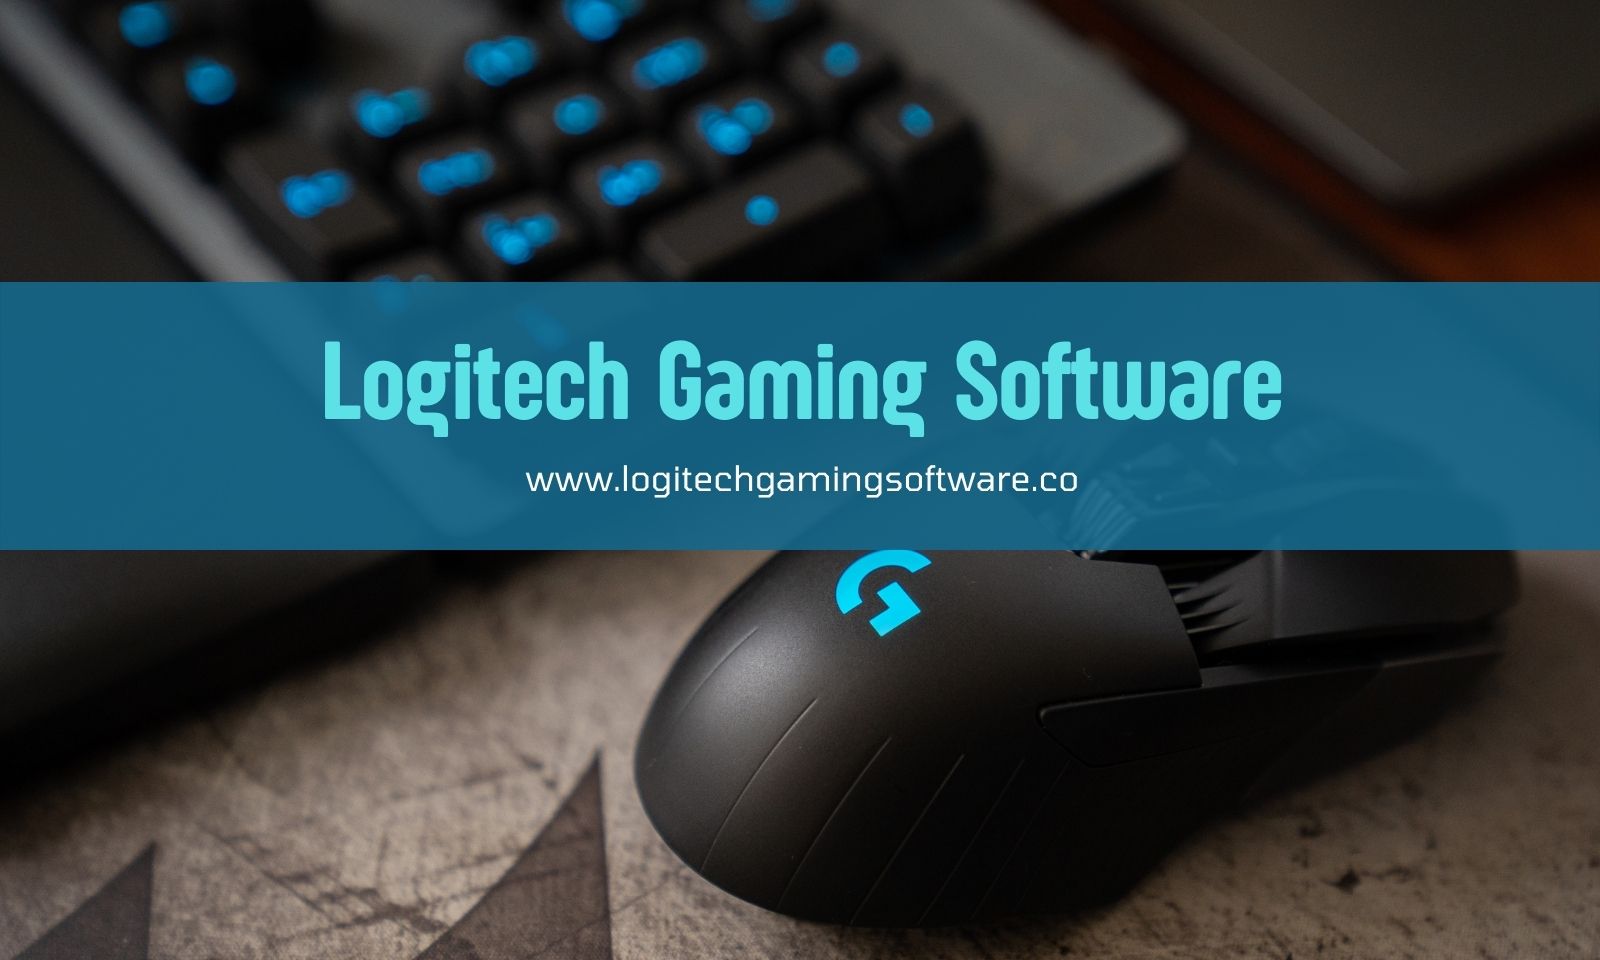 Logitech gaming software